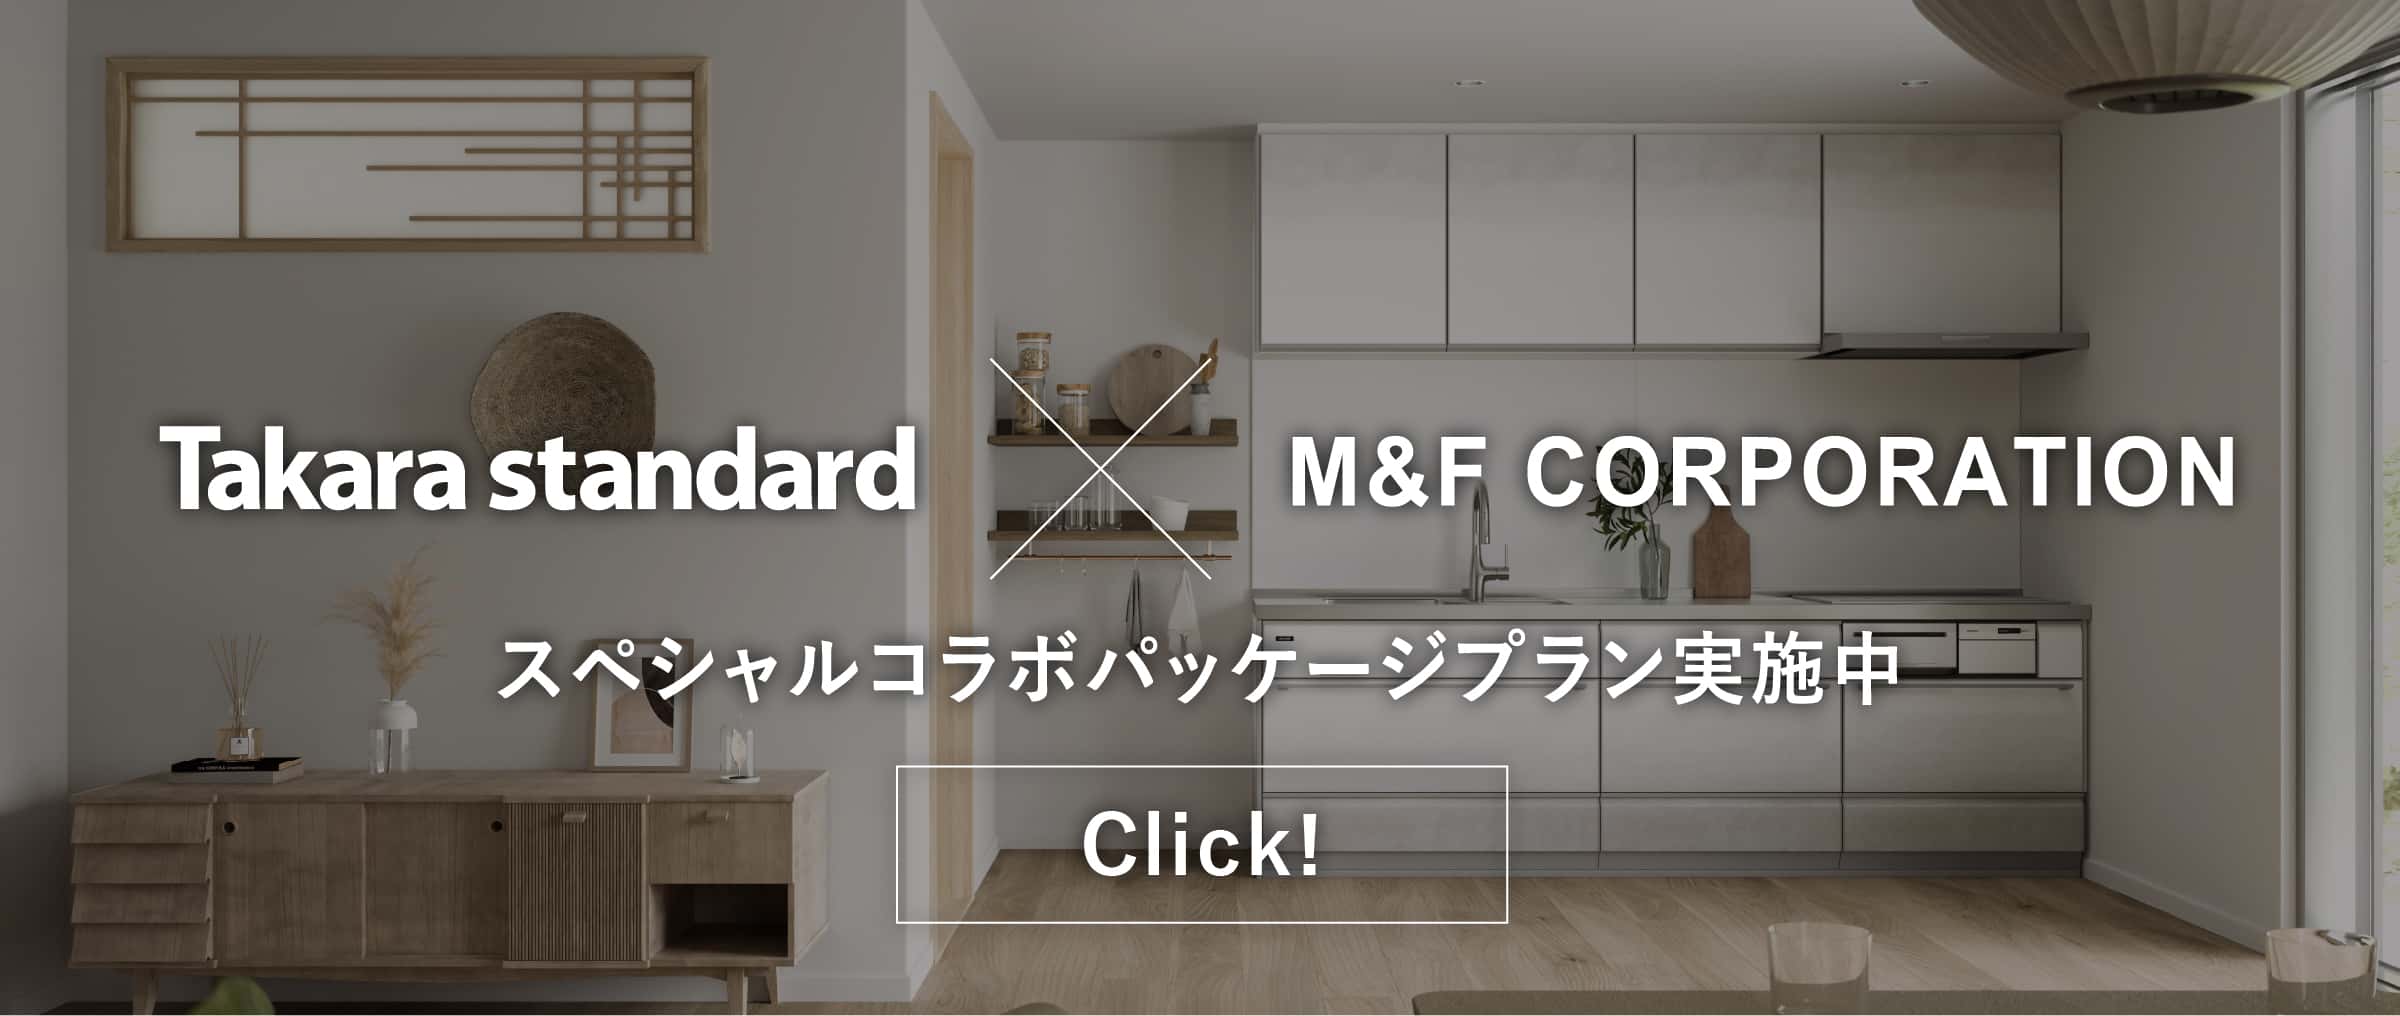 TAKARA STANDARD×M&F CORPORATION スペシャルコラボパッケージプラン実施中